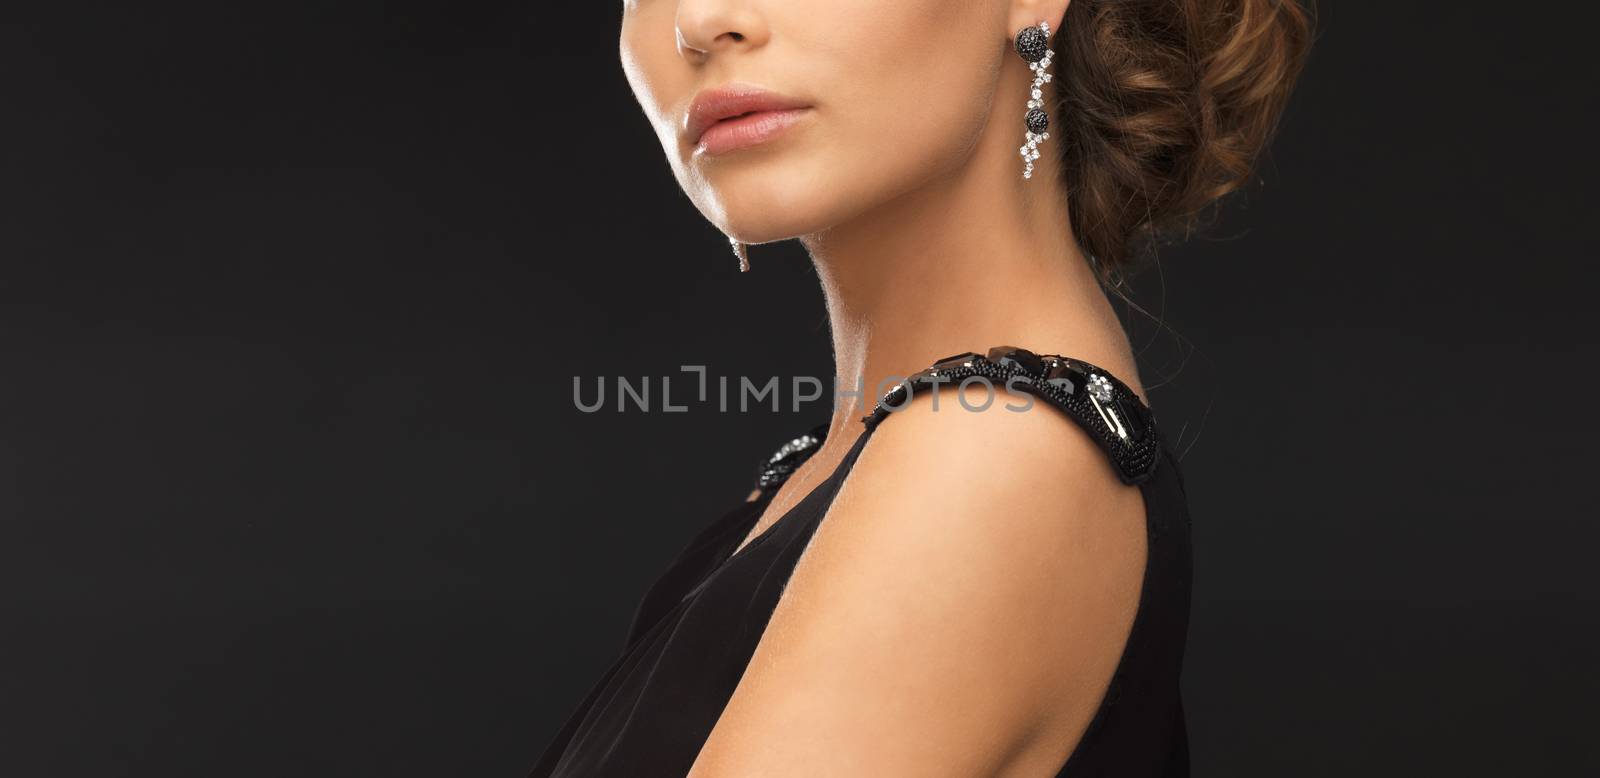 woman with diamond earrings by dolgachov